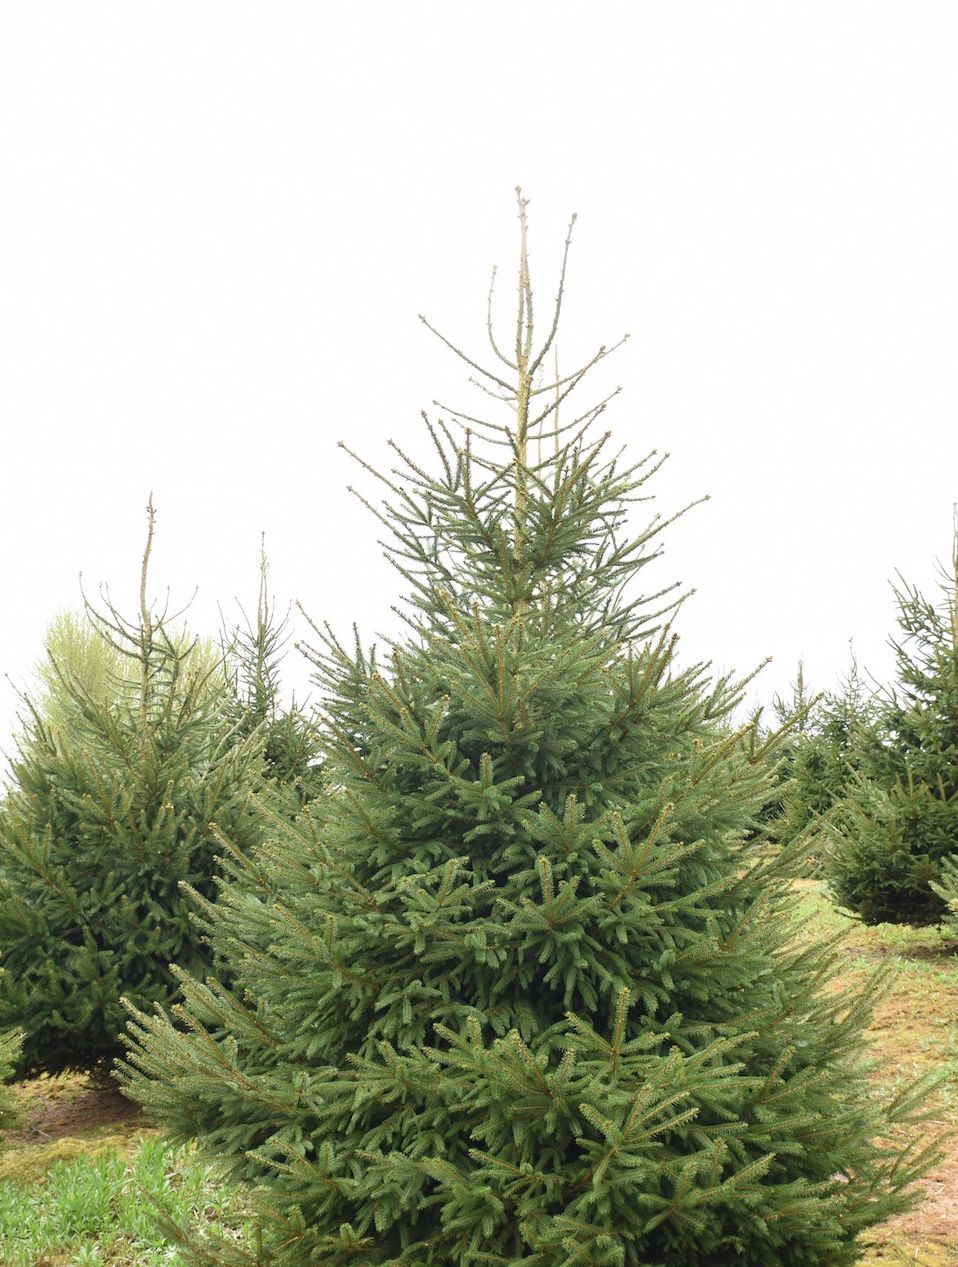 norway spruce christmas tree